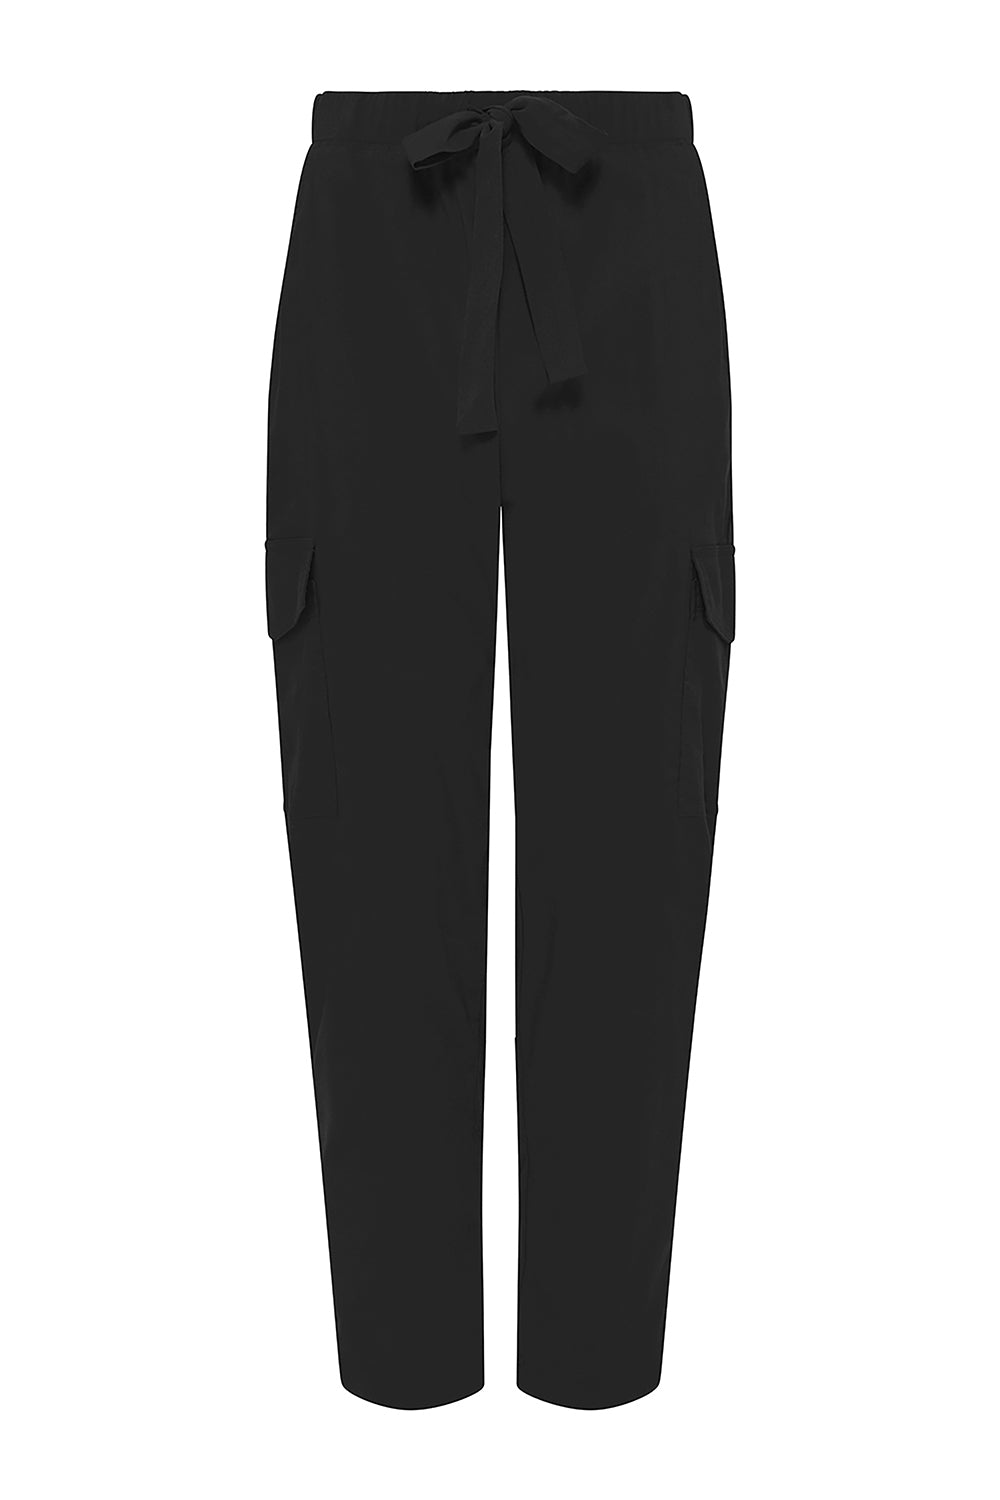 Acrobat Soft Cargo Pant - Black - Pant VERGE